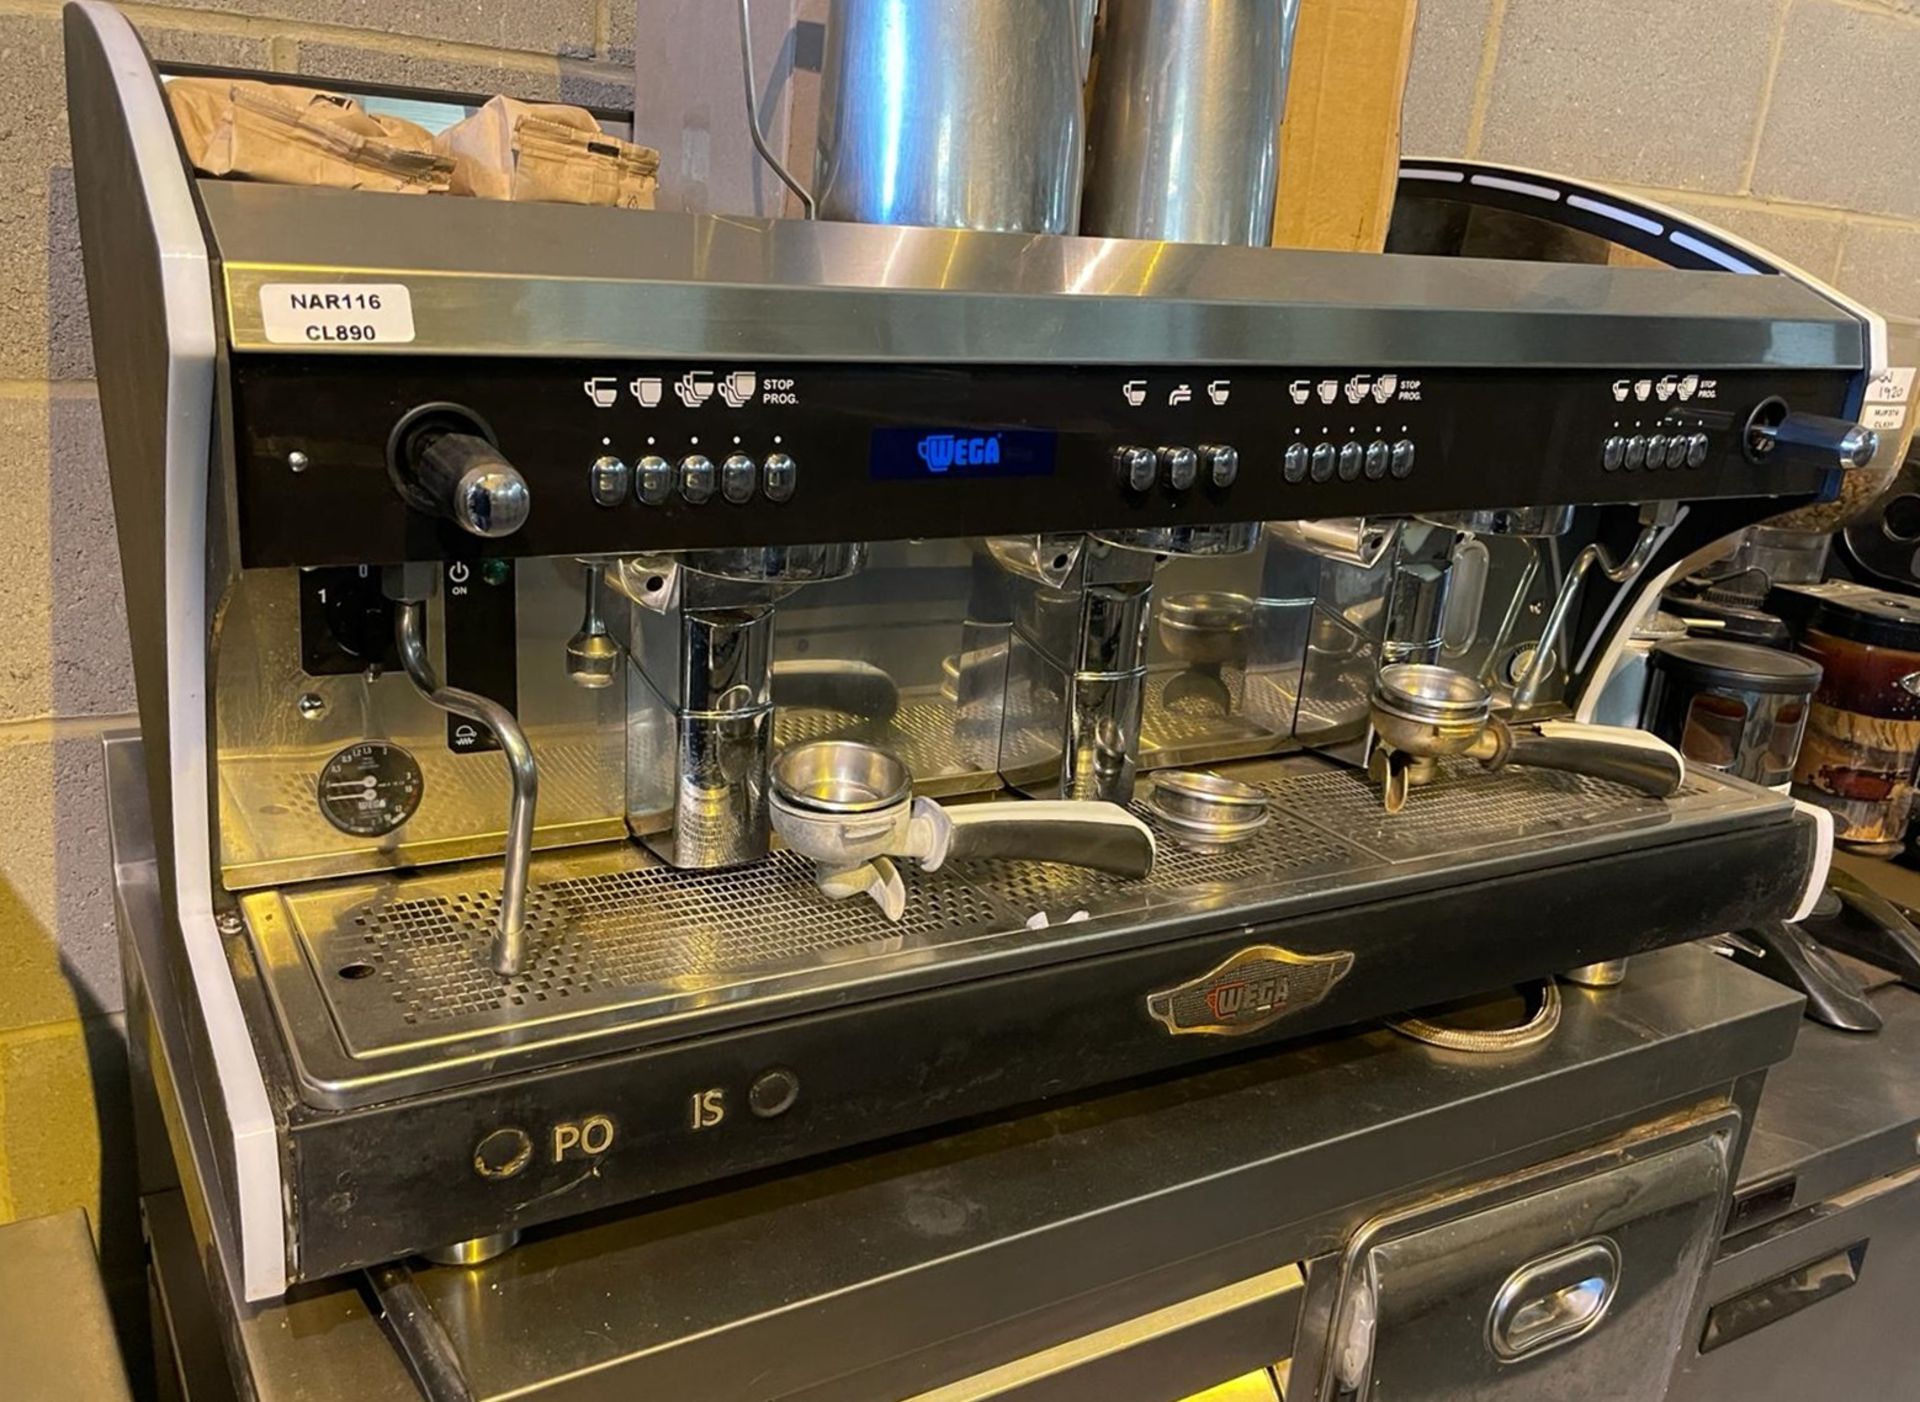 1 x Polaris Wega 3 Group Commercial Espresso Coffee Machine - Stainless Steel / Black Exterior - Image 11 of 11